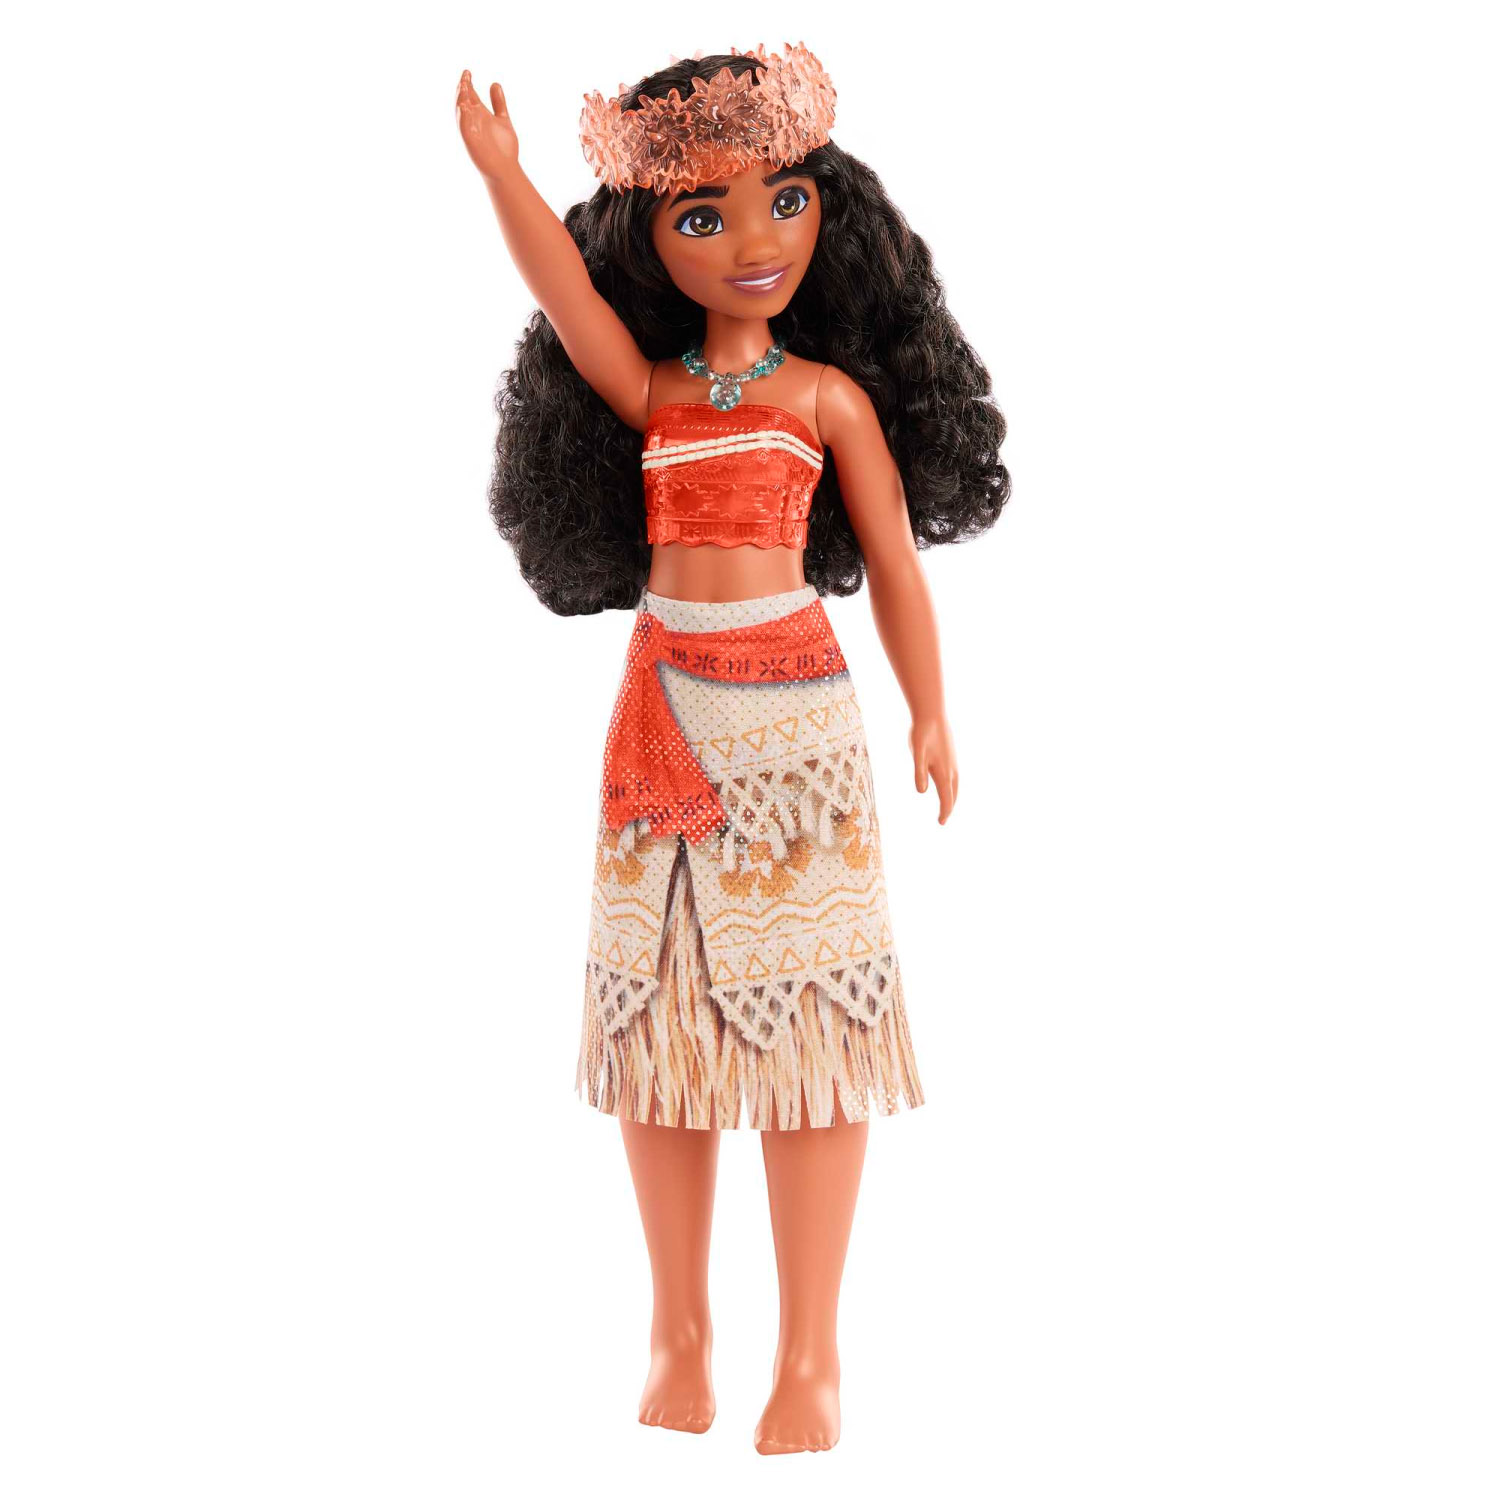 Vaiana Bambola Snodata con capi e accessori scintillanti, Disney Princess - Disney